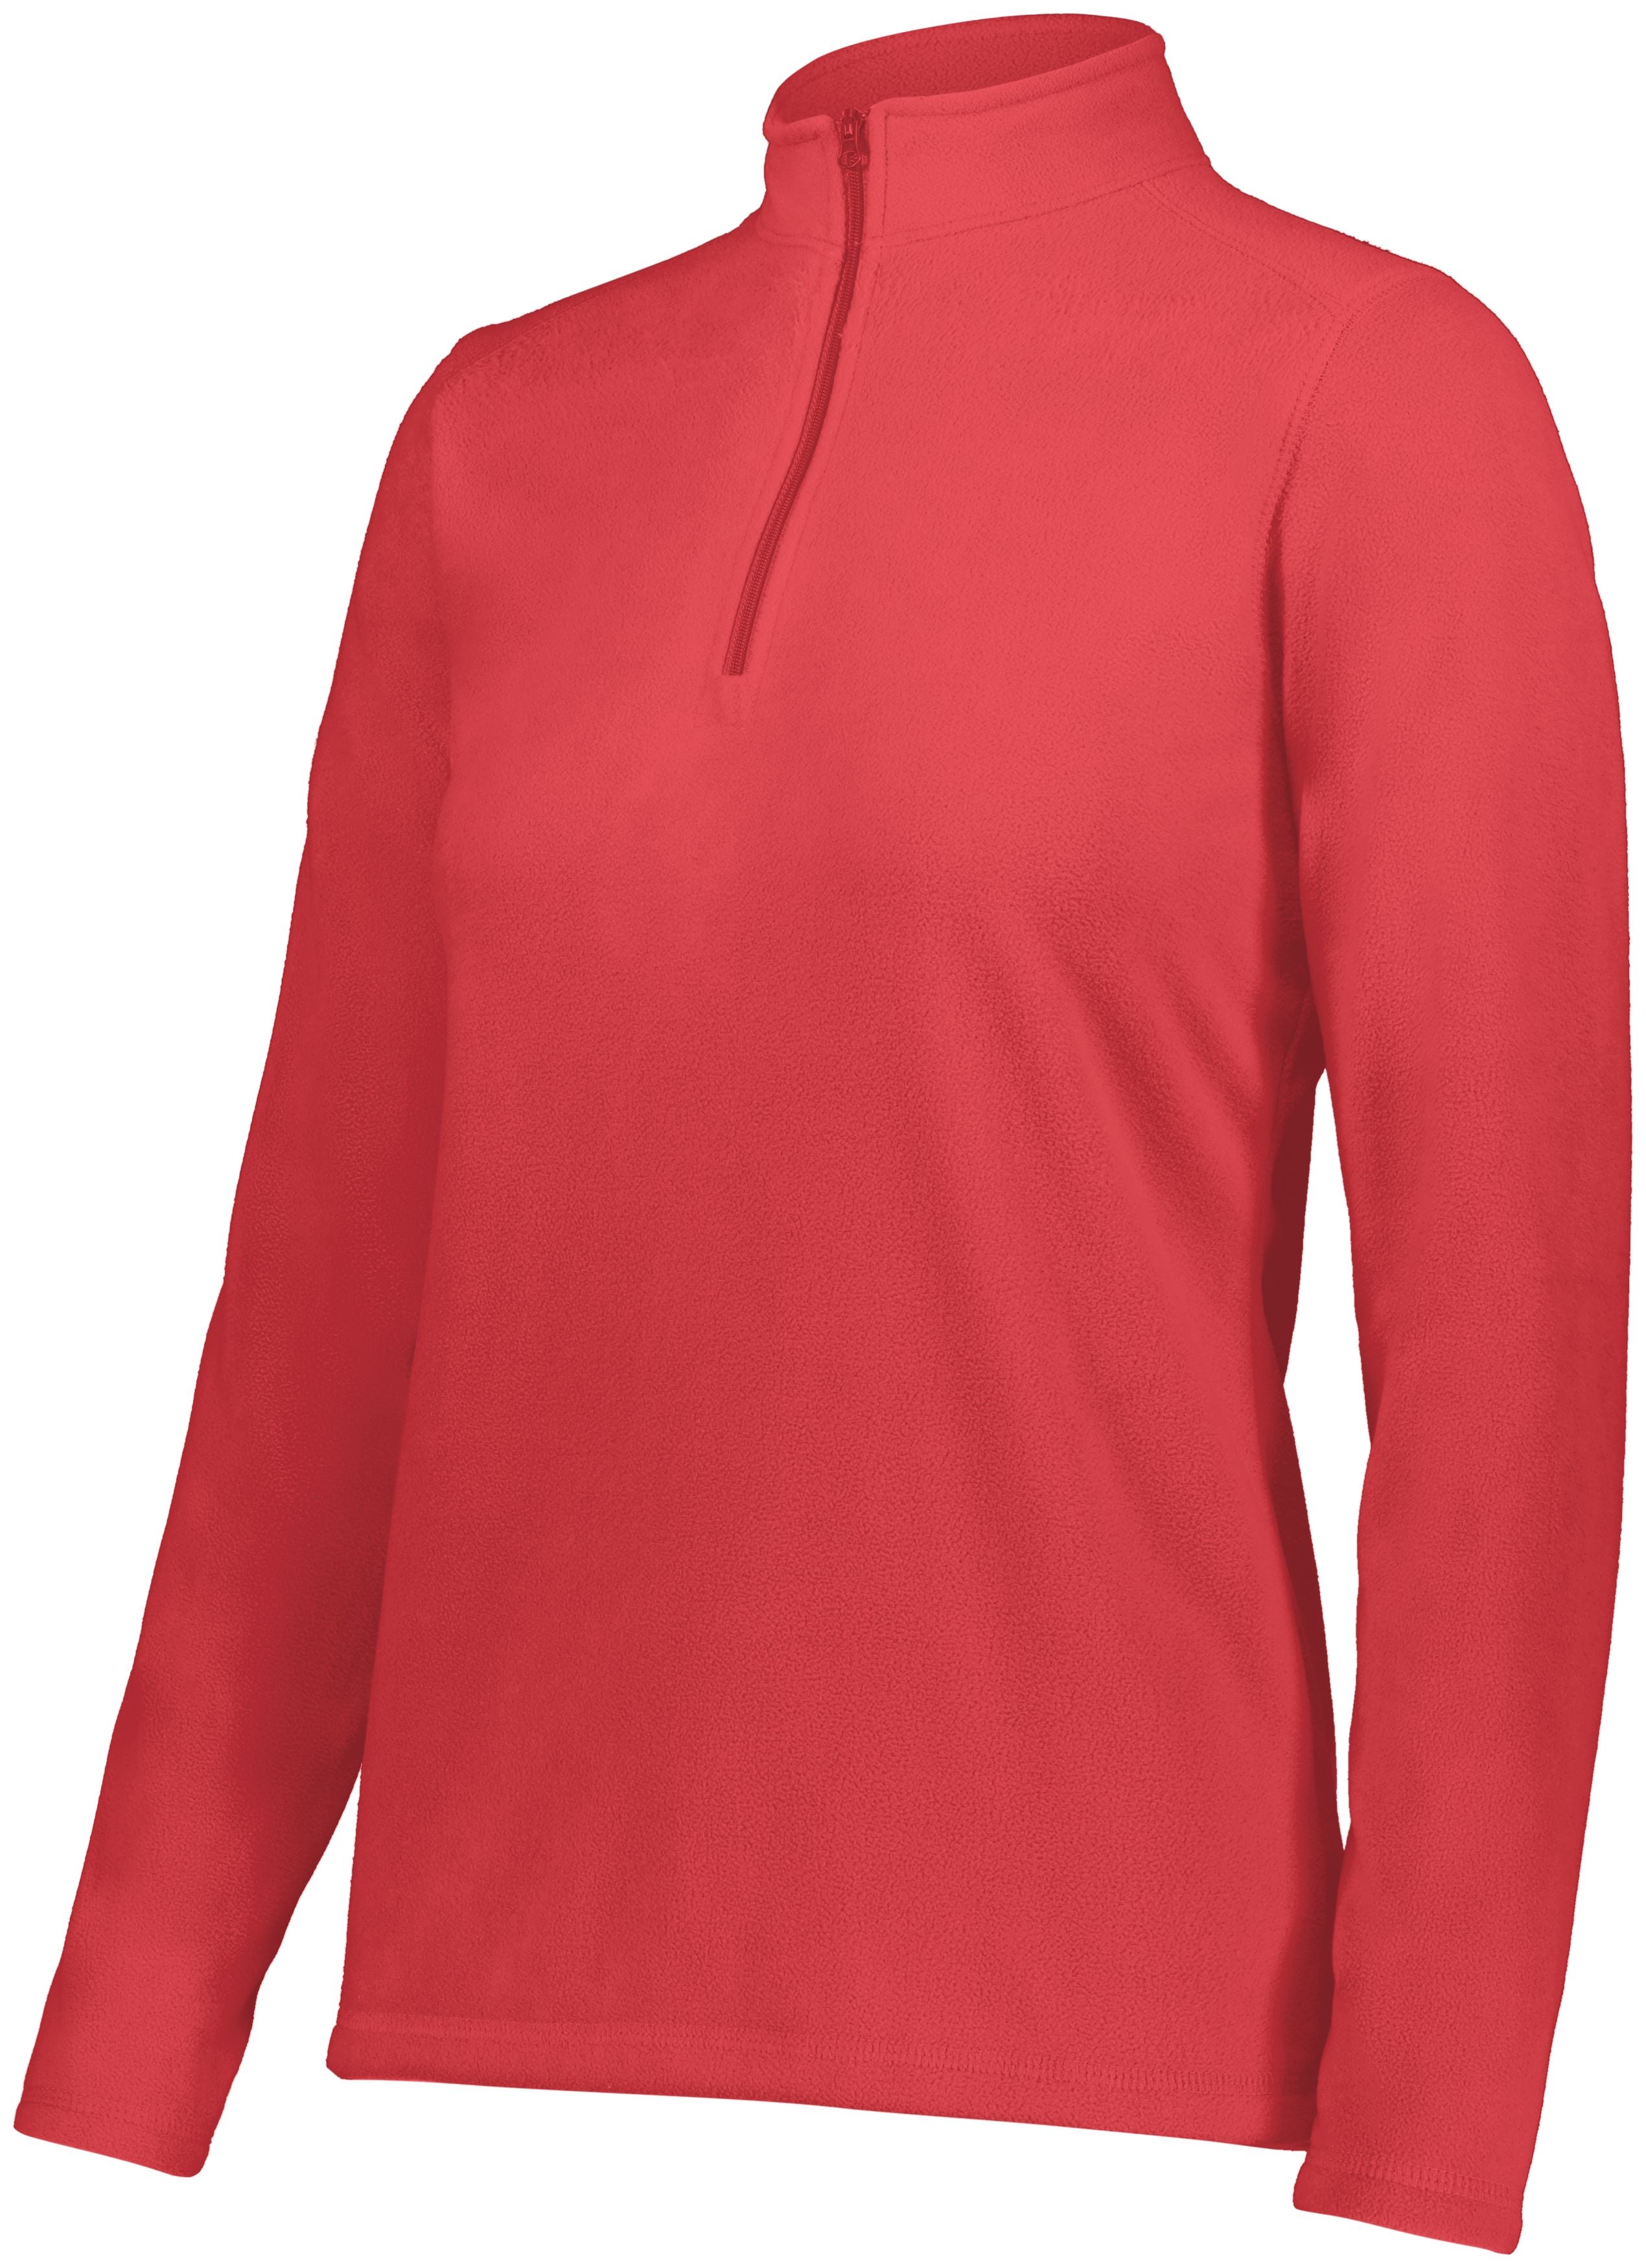 I2) 6864 Augusta Ladies Micro-Lite Fleece 1/4 Zip Pullover - CONNECT WORK TOOLS